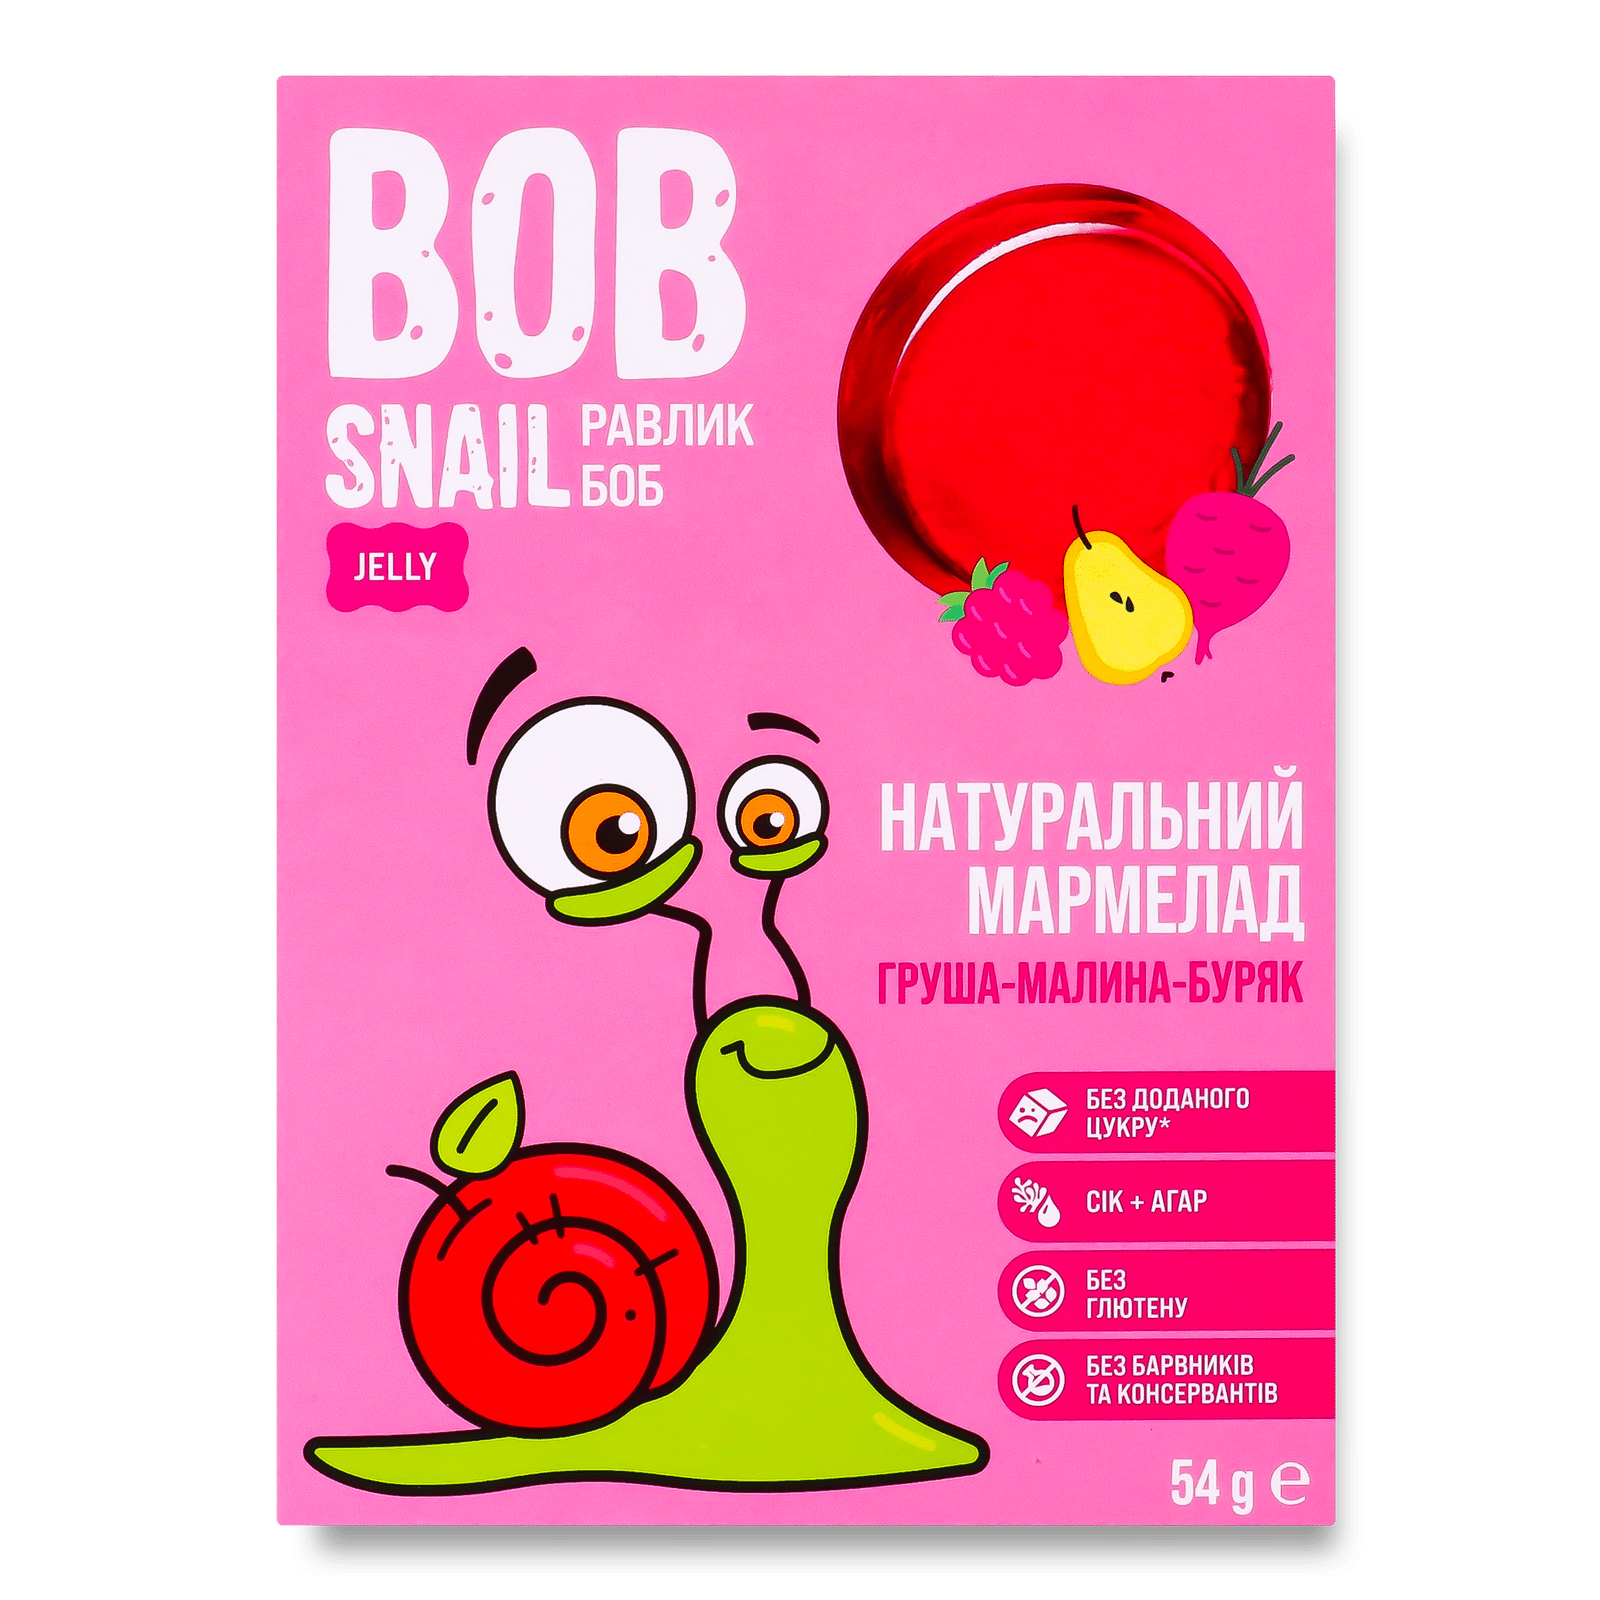 Мармелад Bob Snail груша-малина-буряк - 1